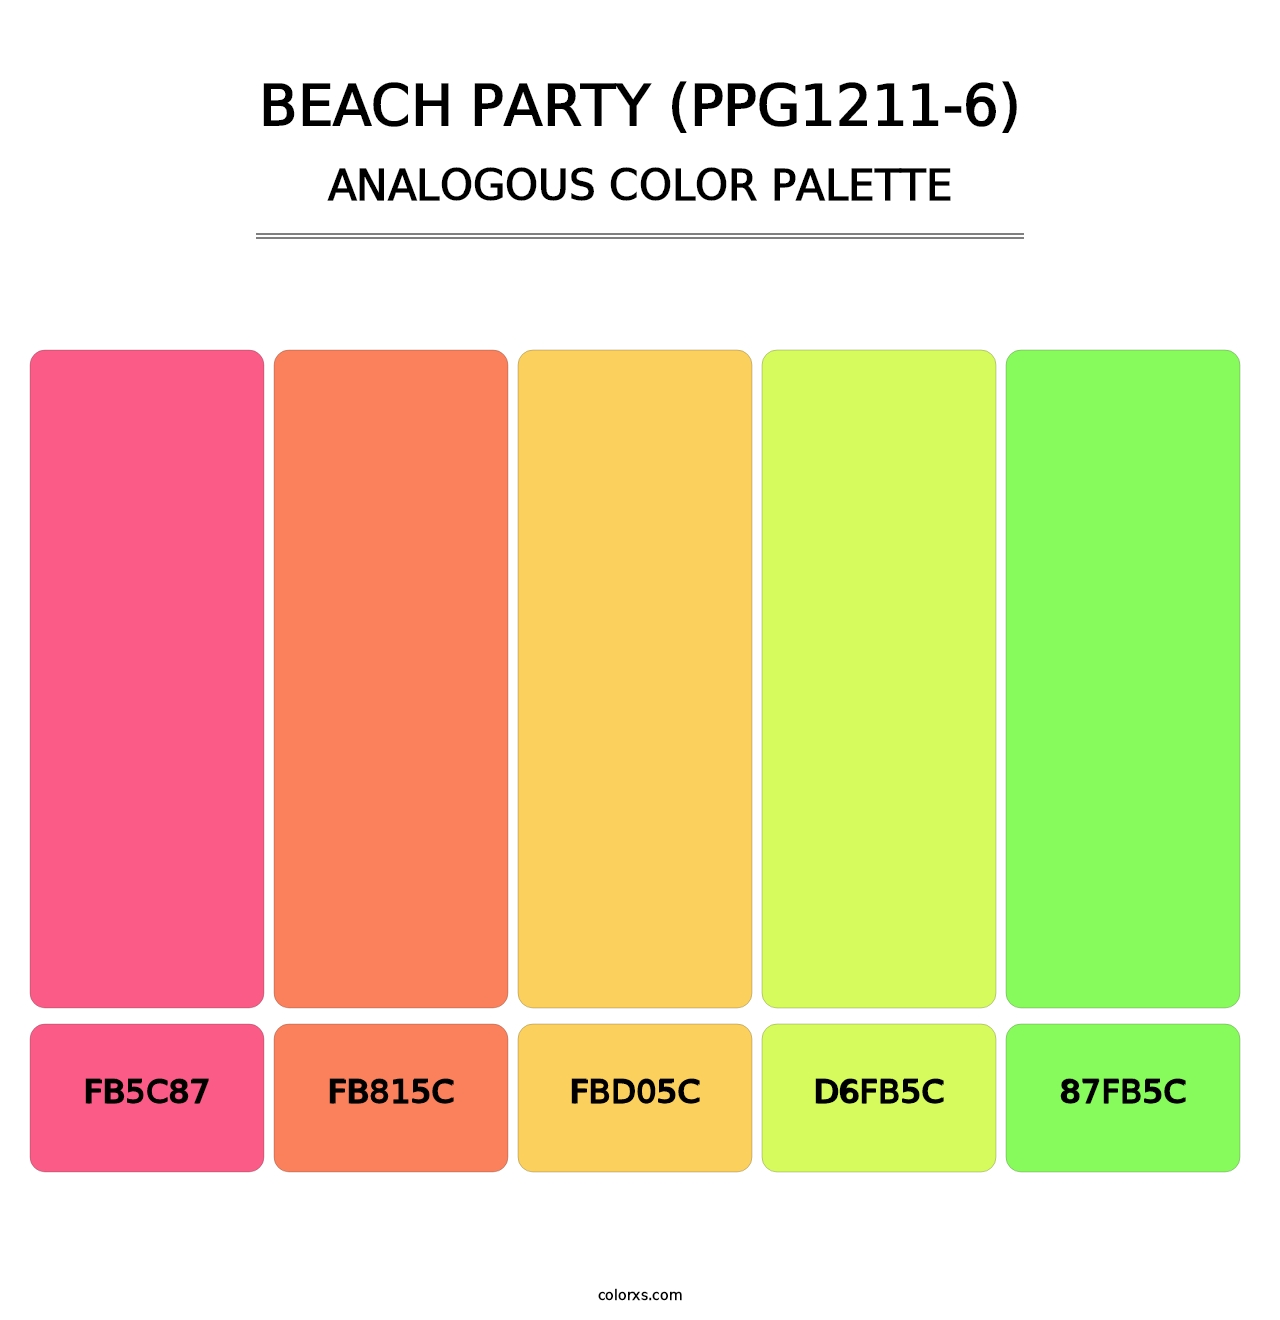 Beach Party (PPG1211-6) - Analogous Color Palette